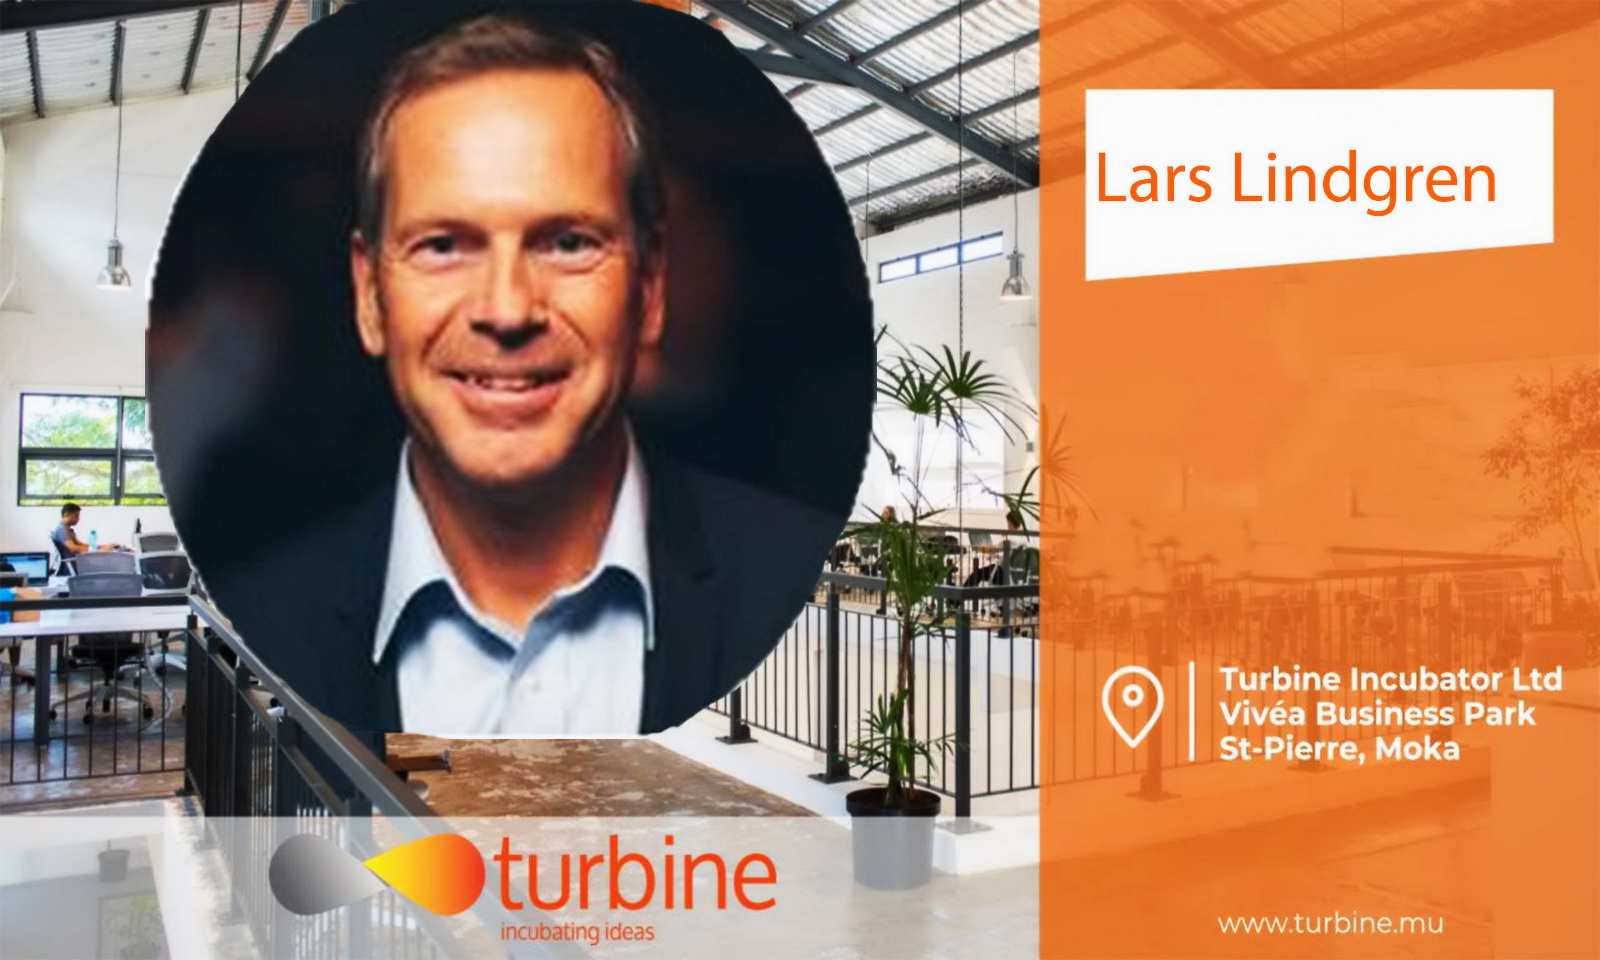 Lars Lindgren an expert in local startups